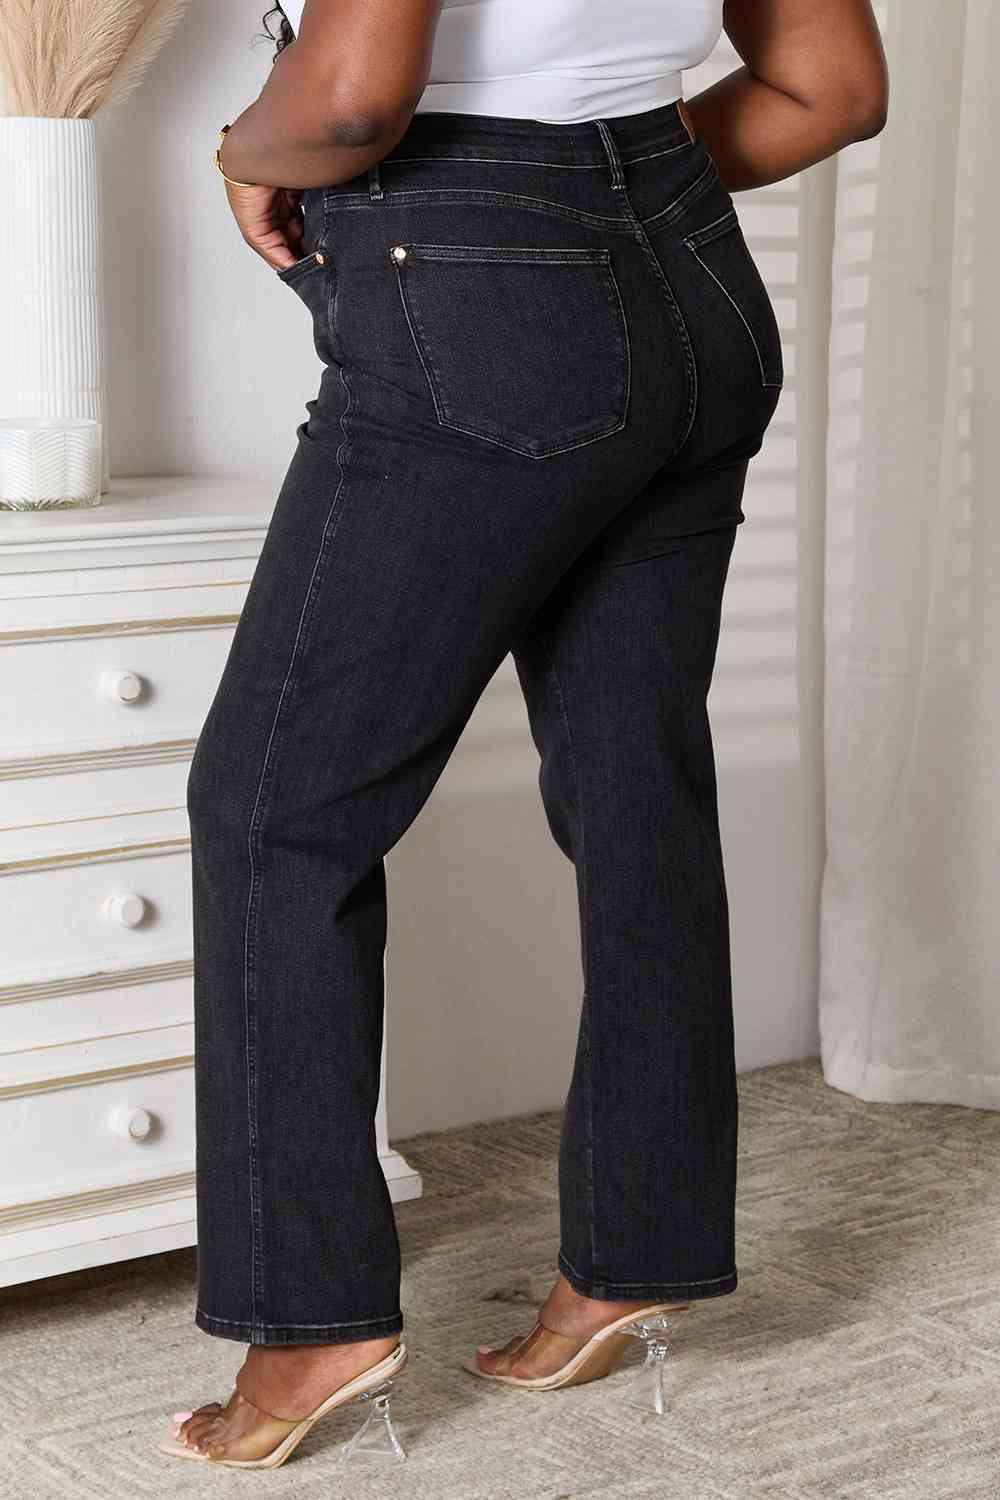 Women's Plus Size Black Straight Leg Jeans - MXSTUDIO.COM